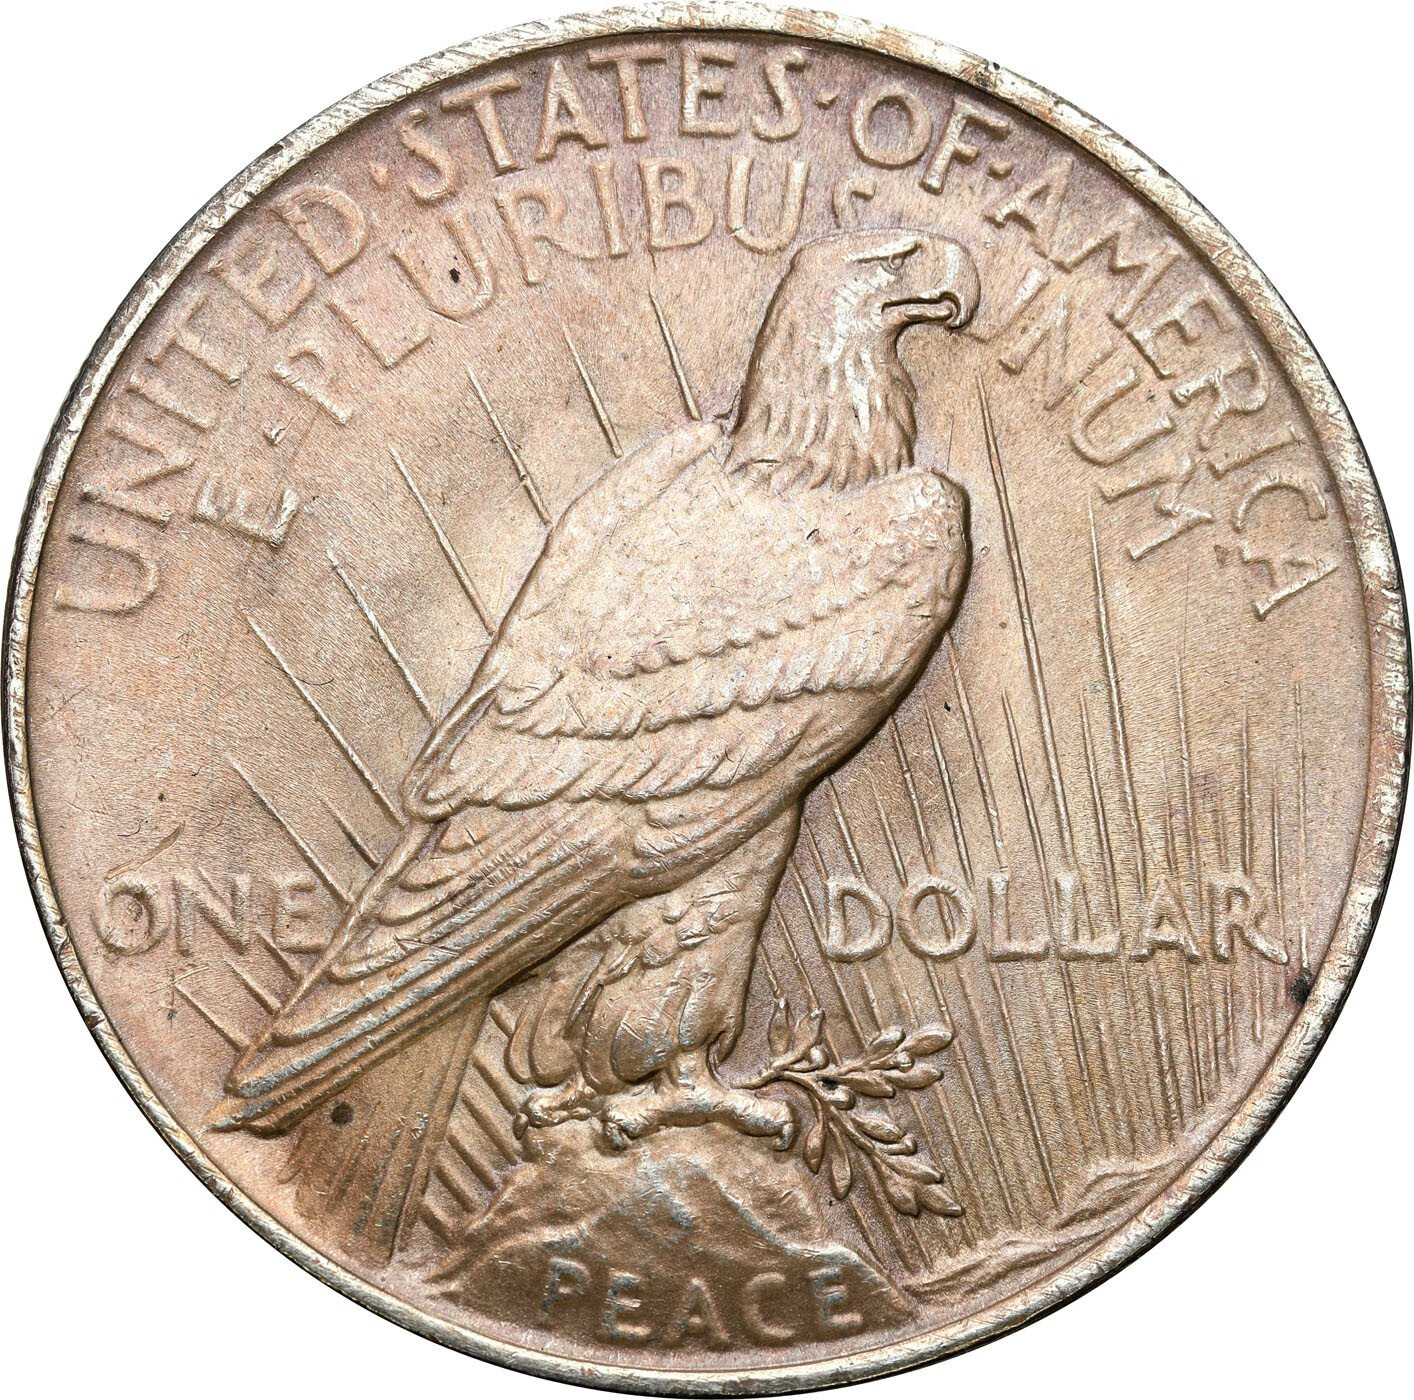 USA. Dolar 1922 Peace, Filadelfia